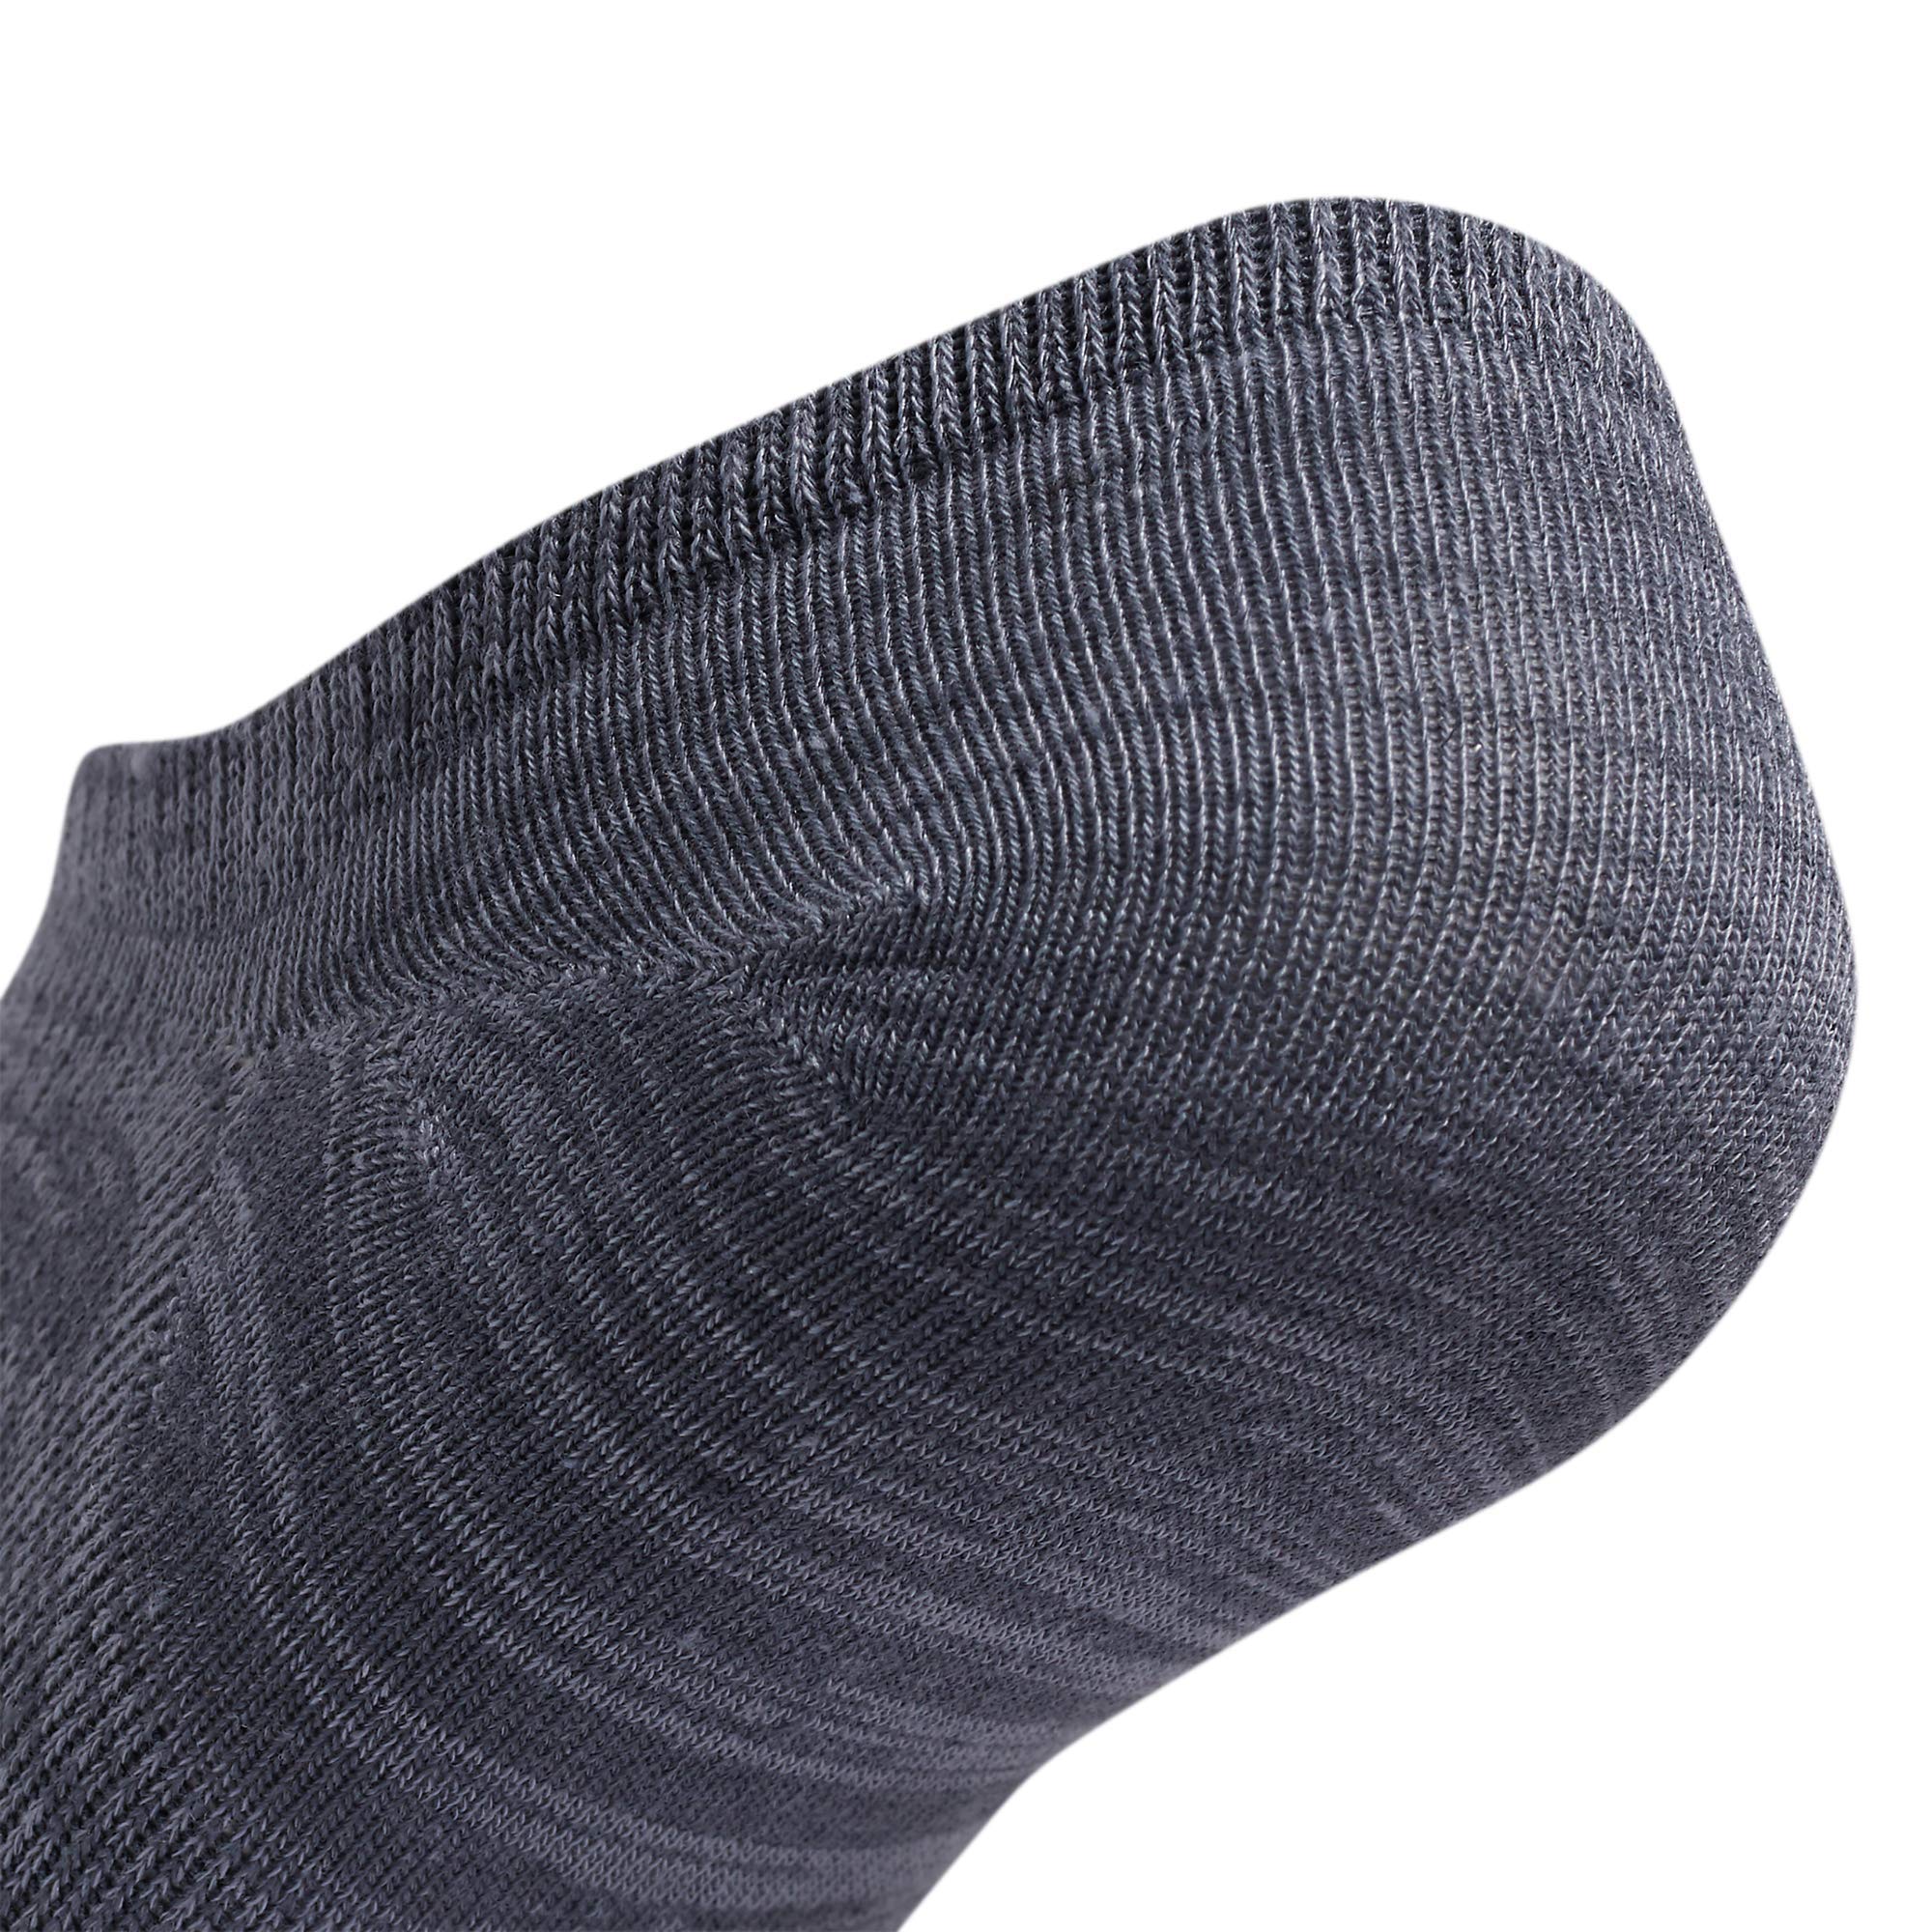 adidas Men's Superlite Super No Show Socks (6-Pair), Onix Grey/Grey/Black, Large